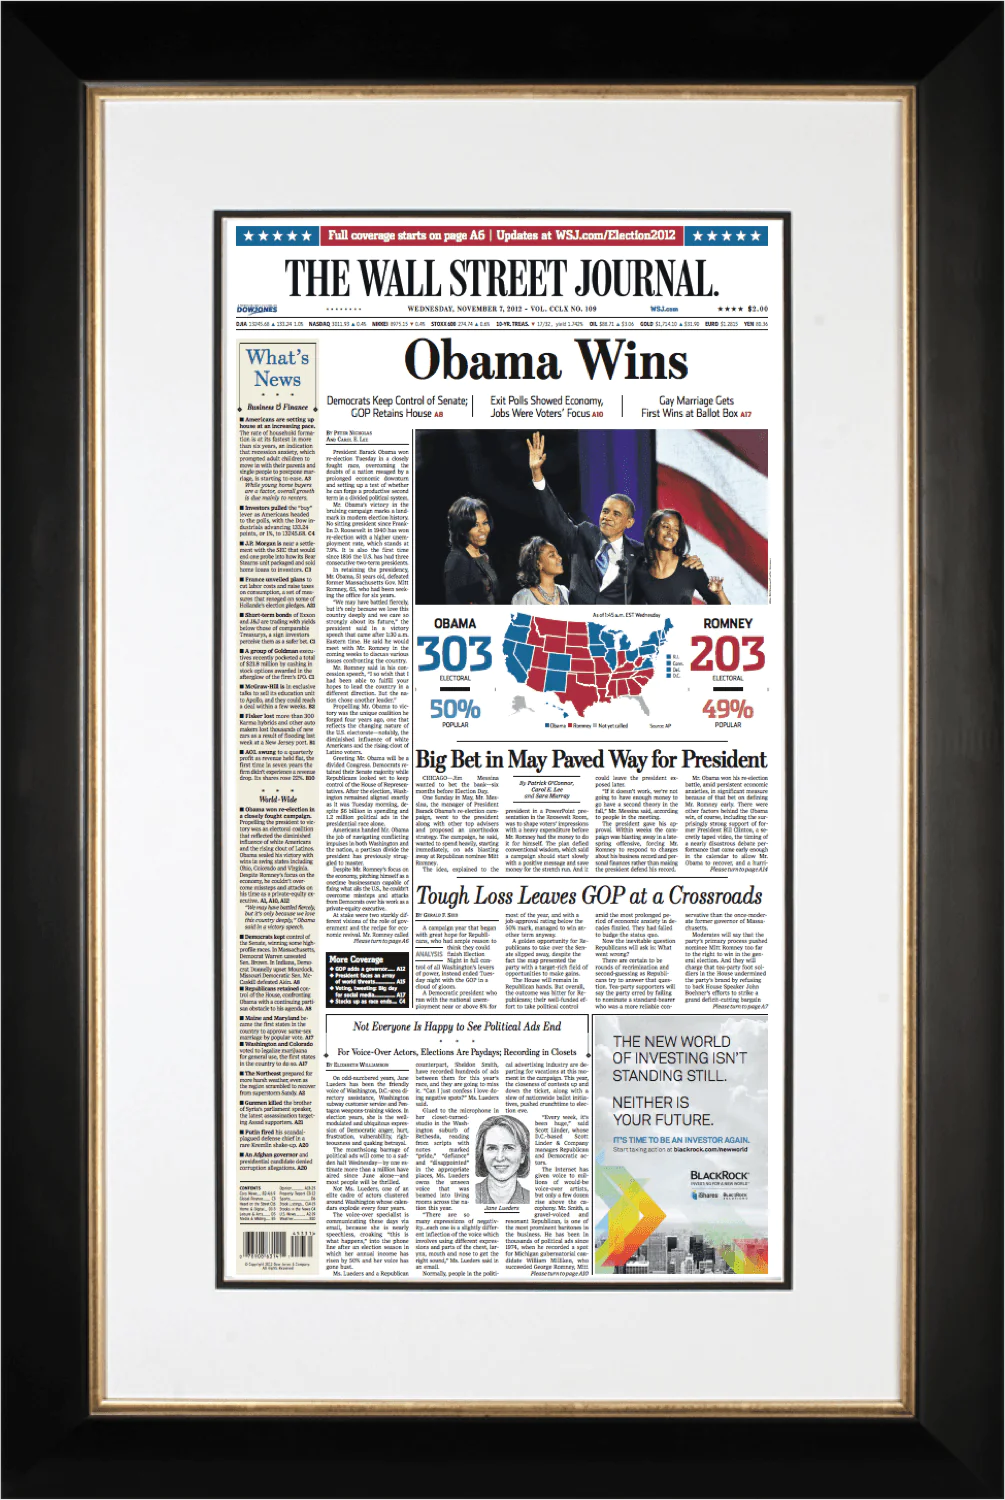 Obama Wins / Election 2012 | The Wall Street Journal Framed Reprint, November 7, 2012